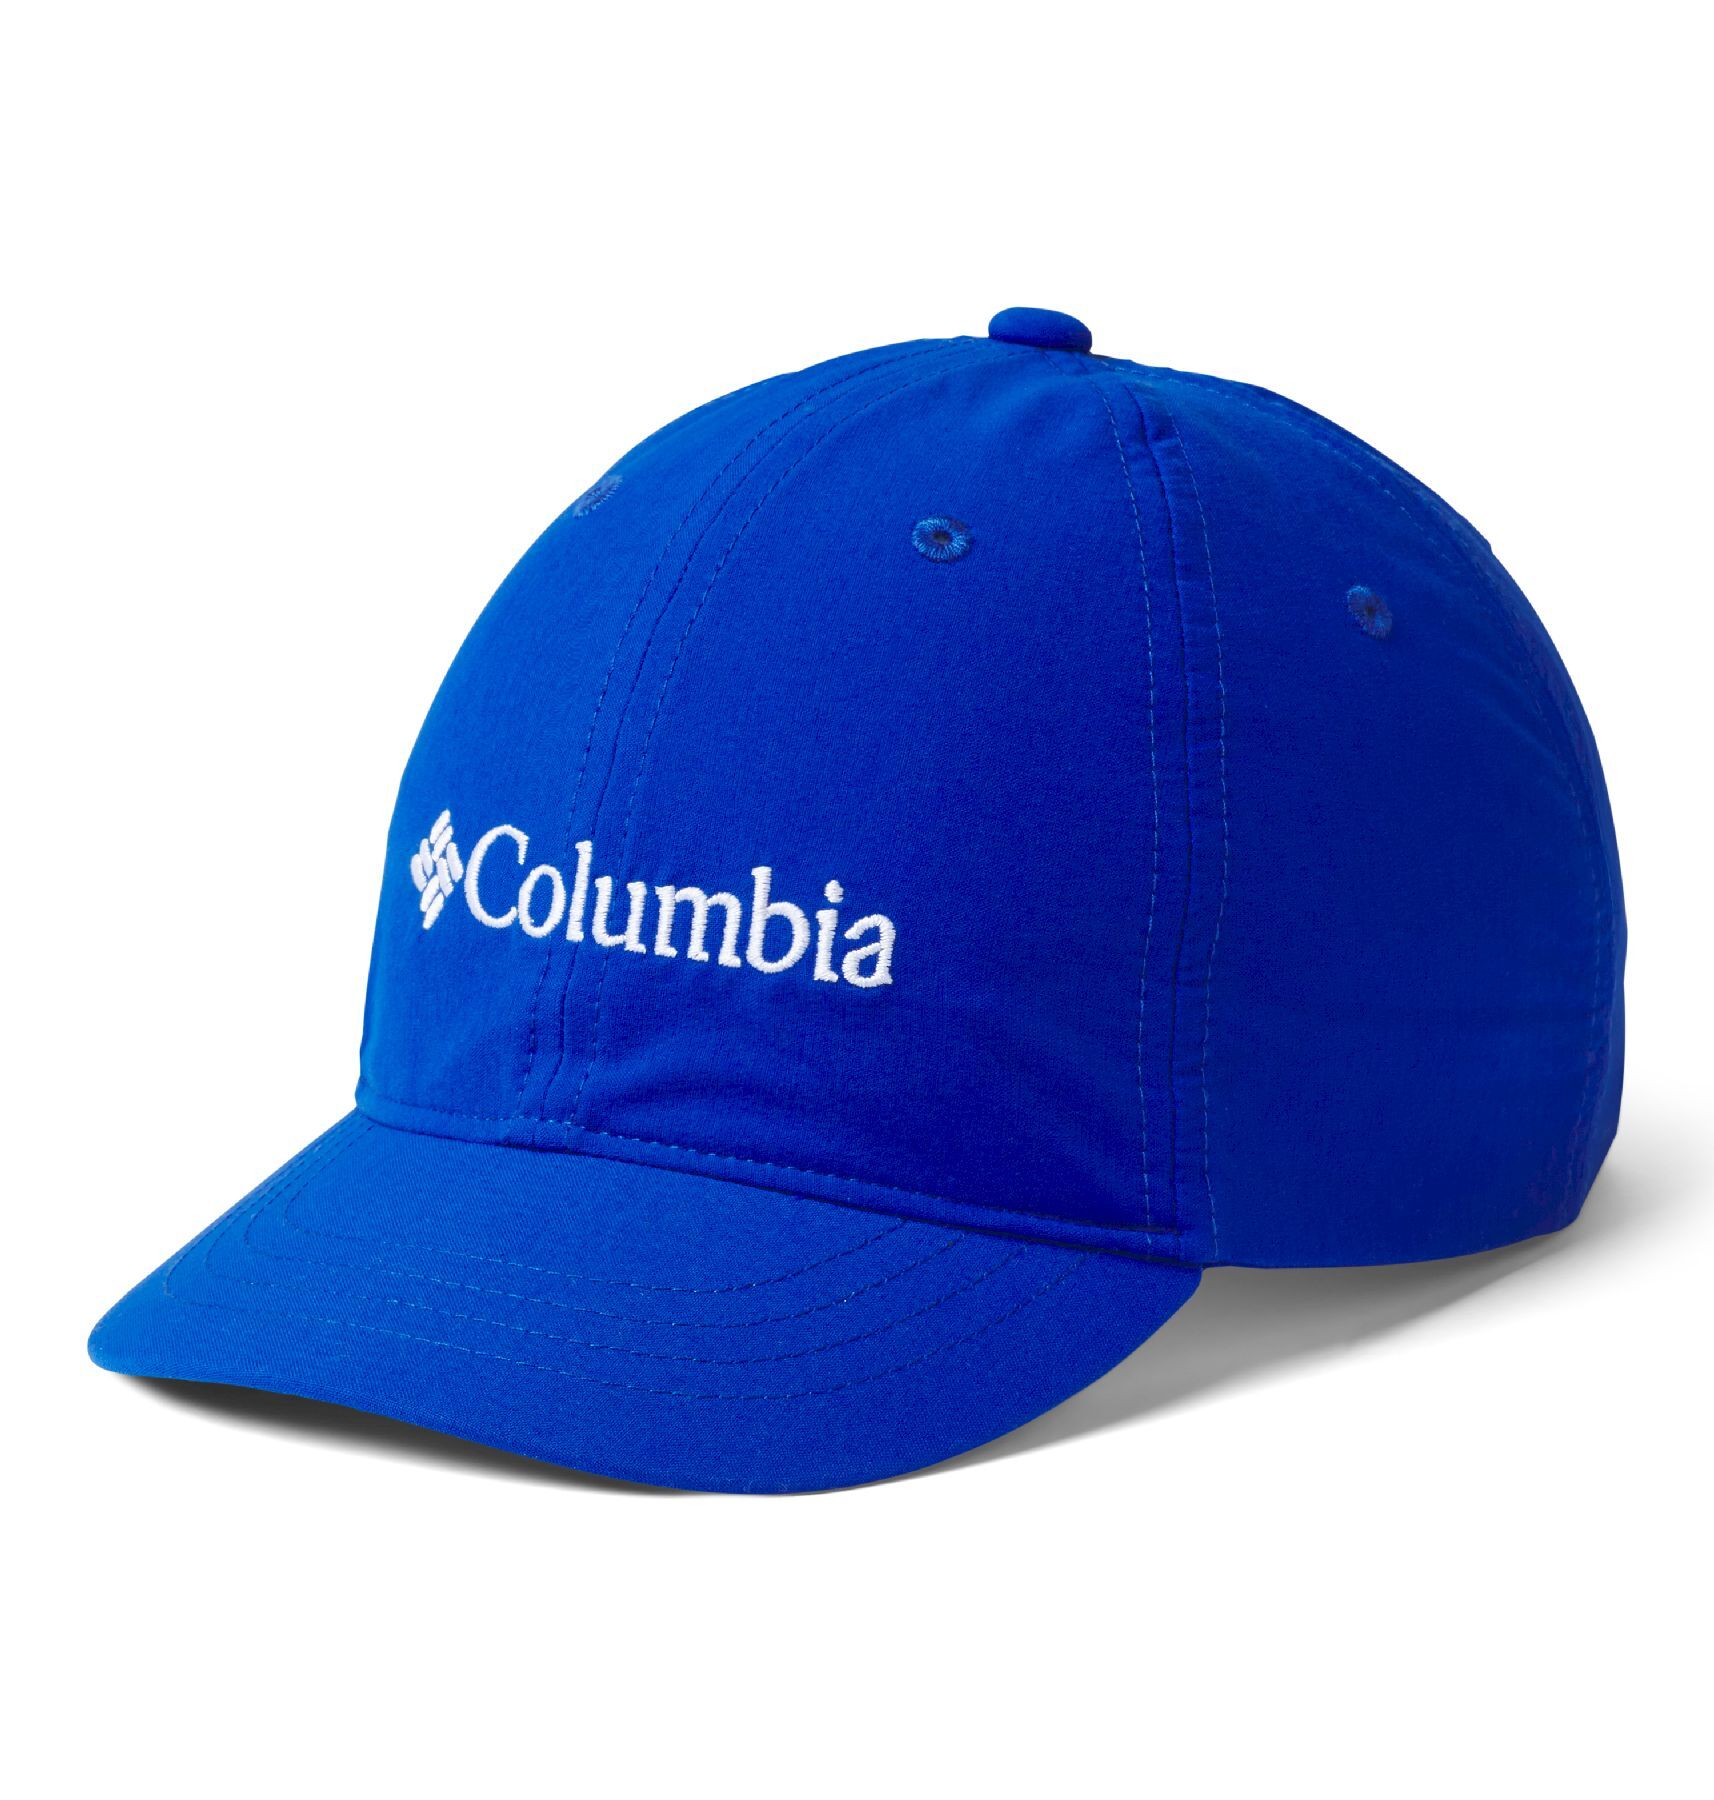 Columbia Youth Adjustable Ball Cap - Gorra - Niños